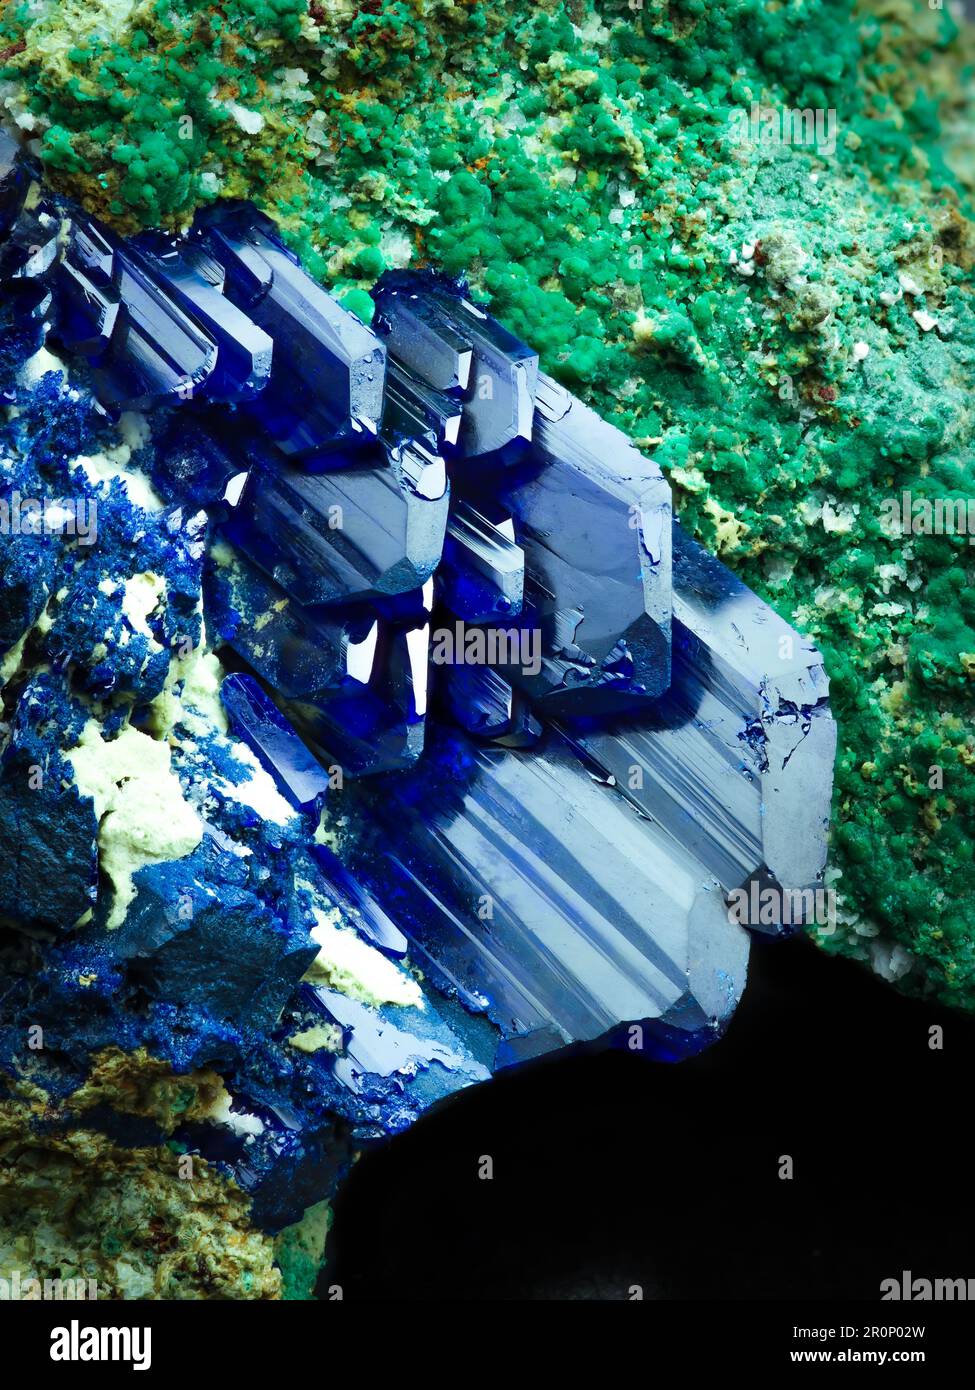 Blue azurite crystal on malachite matrix. macro detail texture background. close-up raw rough unpolished semi-precious gemstone Stock Photo